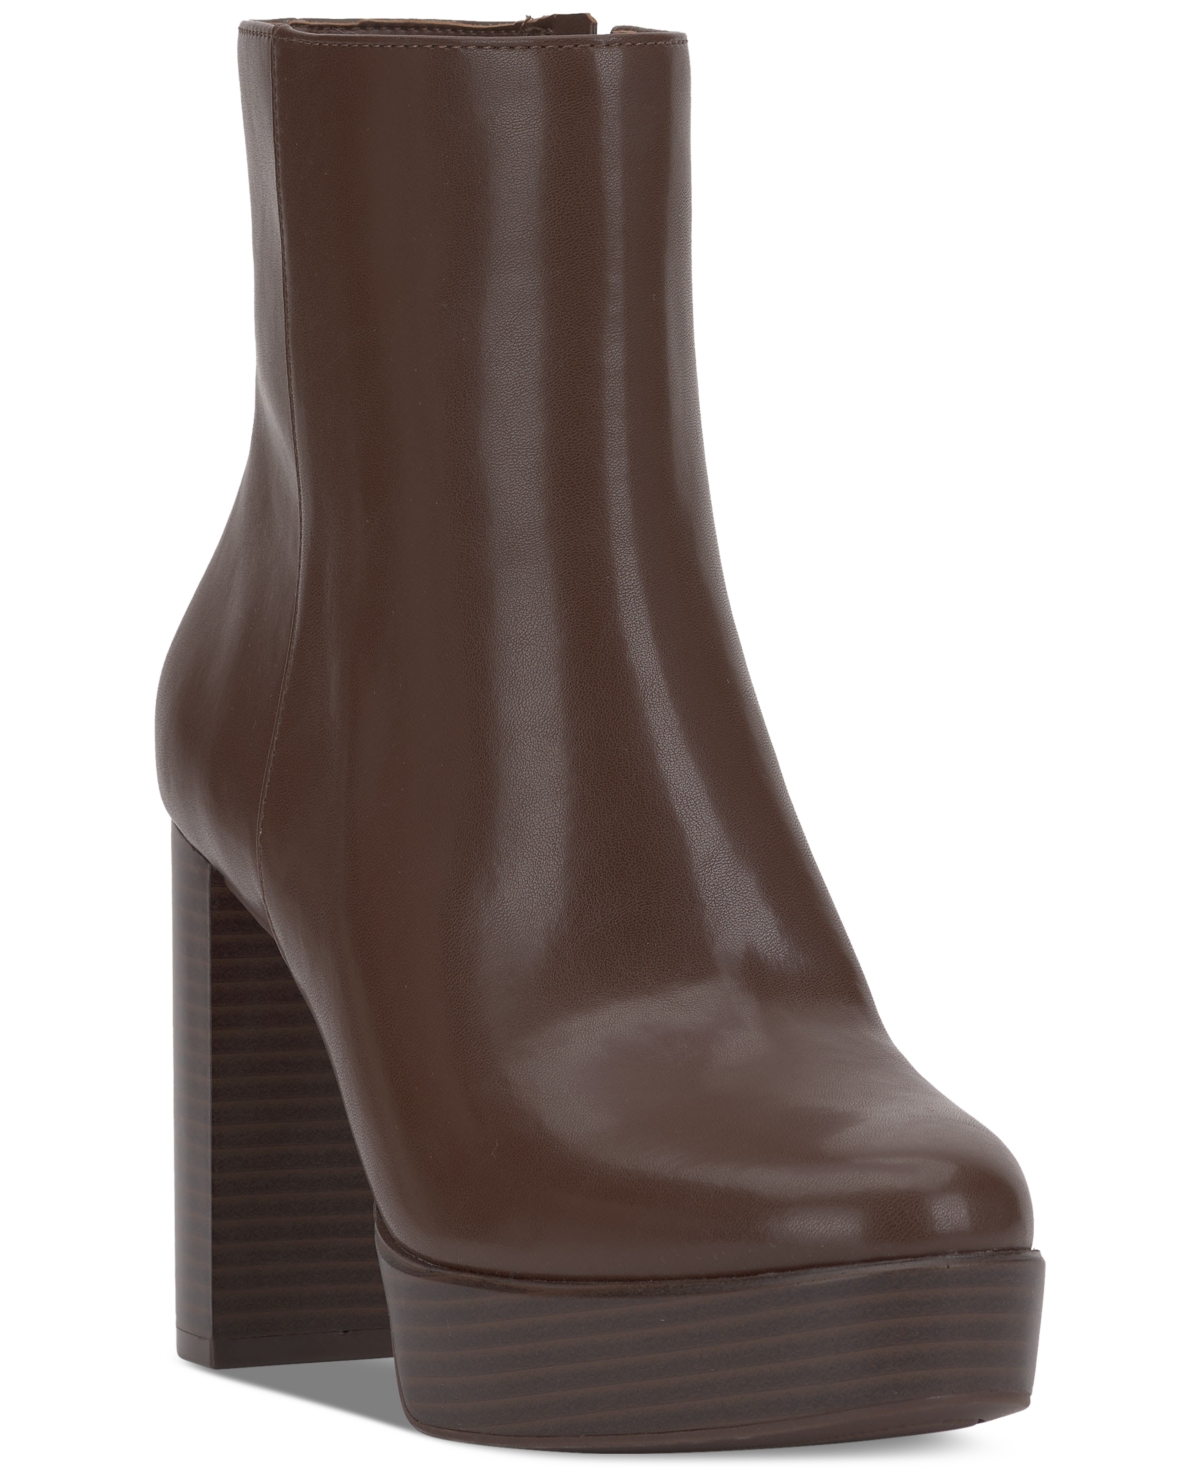 Women's Galsuenda Platform Booties, Created for Macy's - Brown Smooth